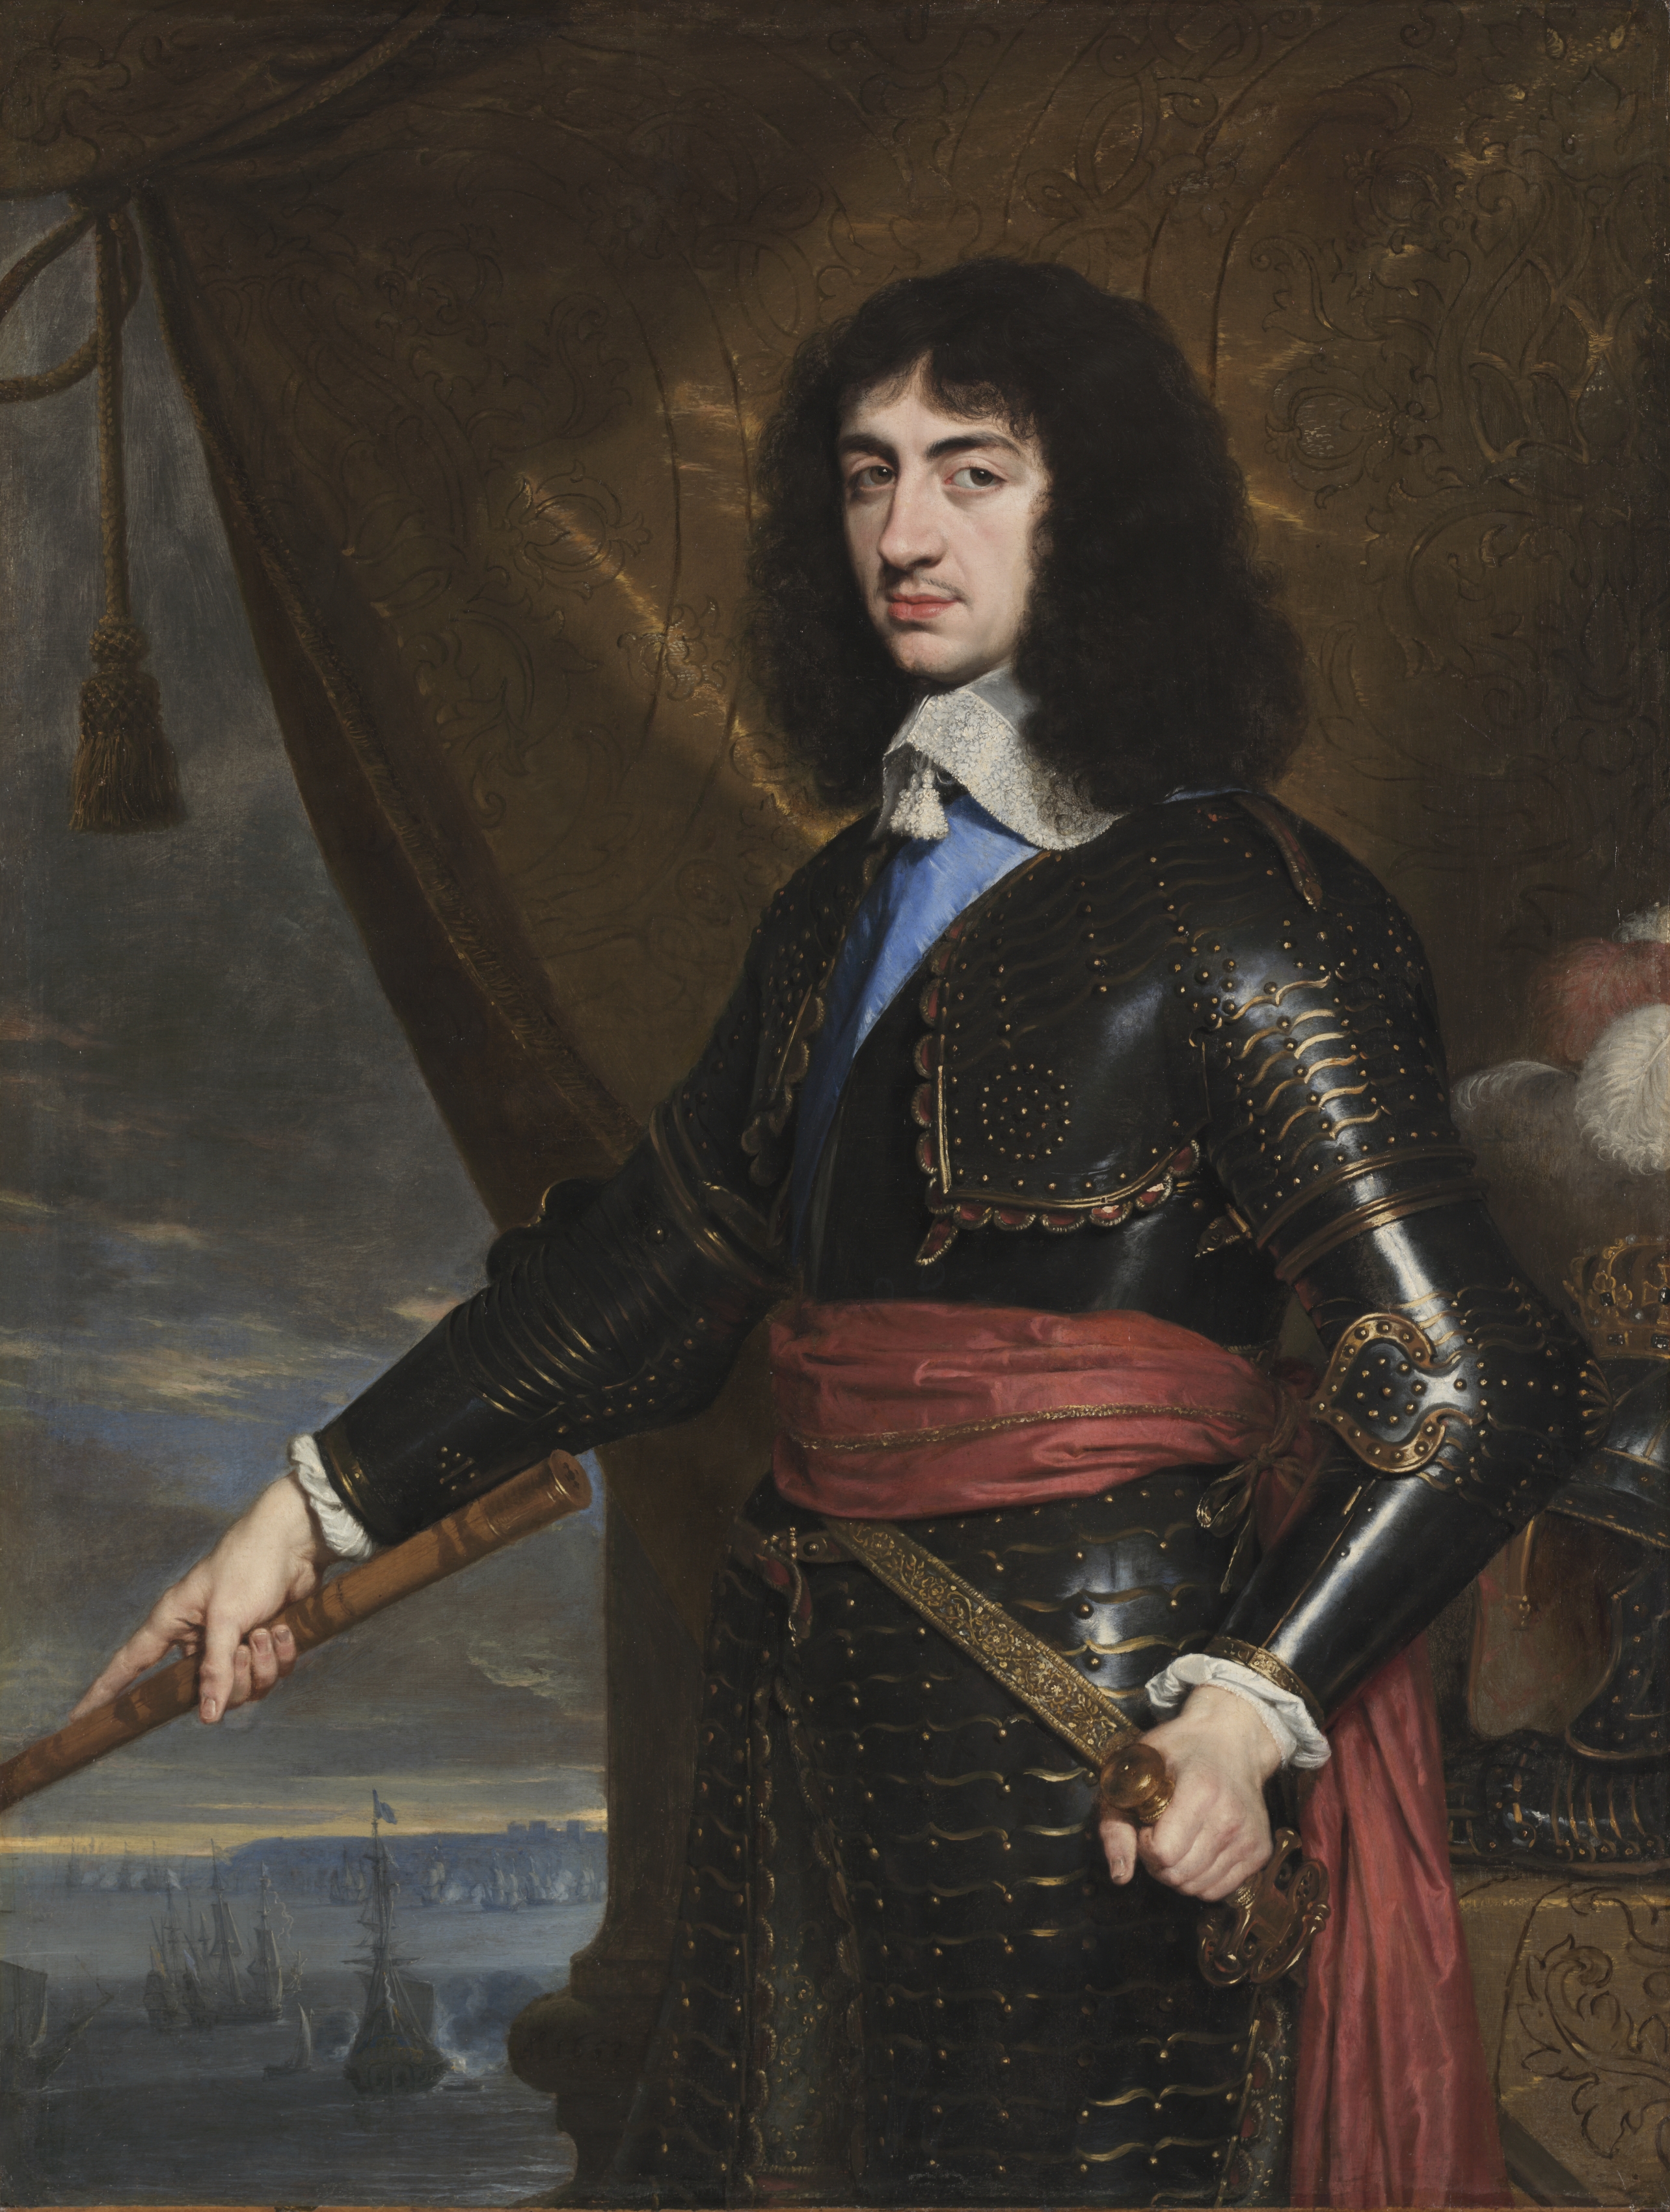 Portrait of King Charles II of England